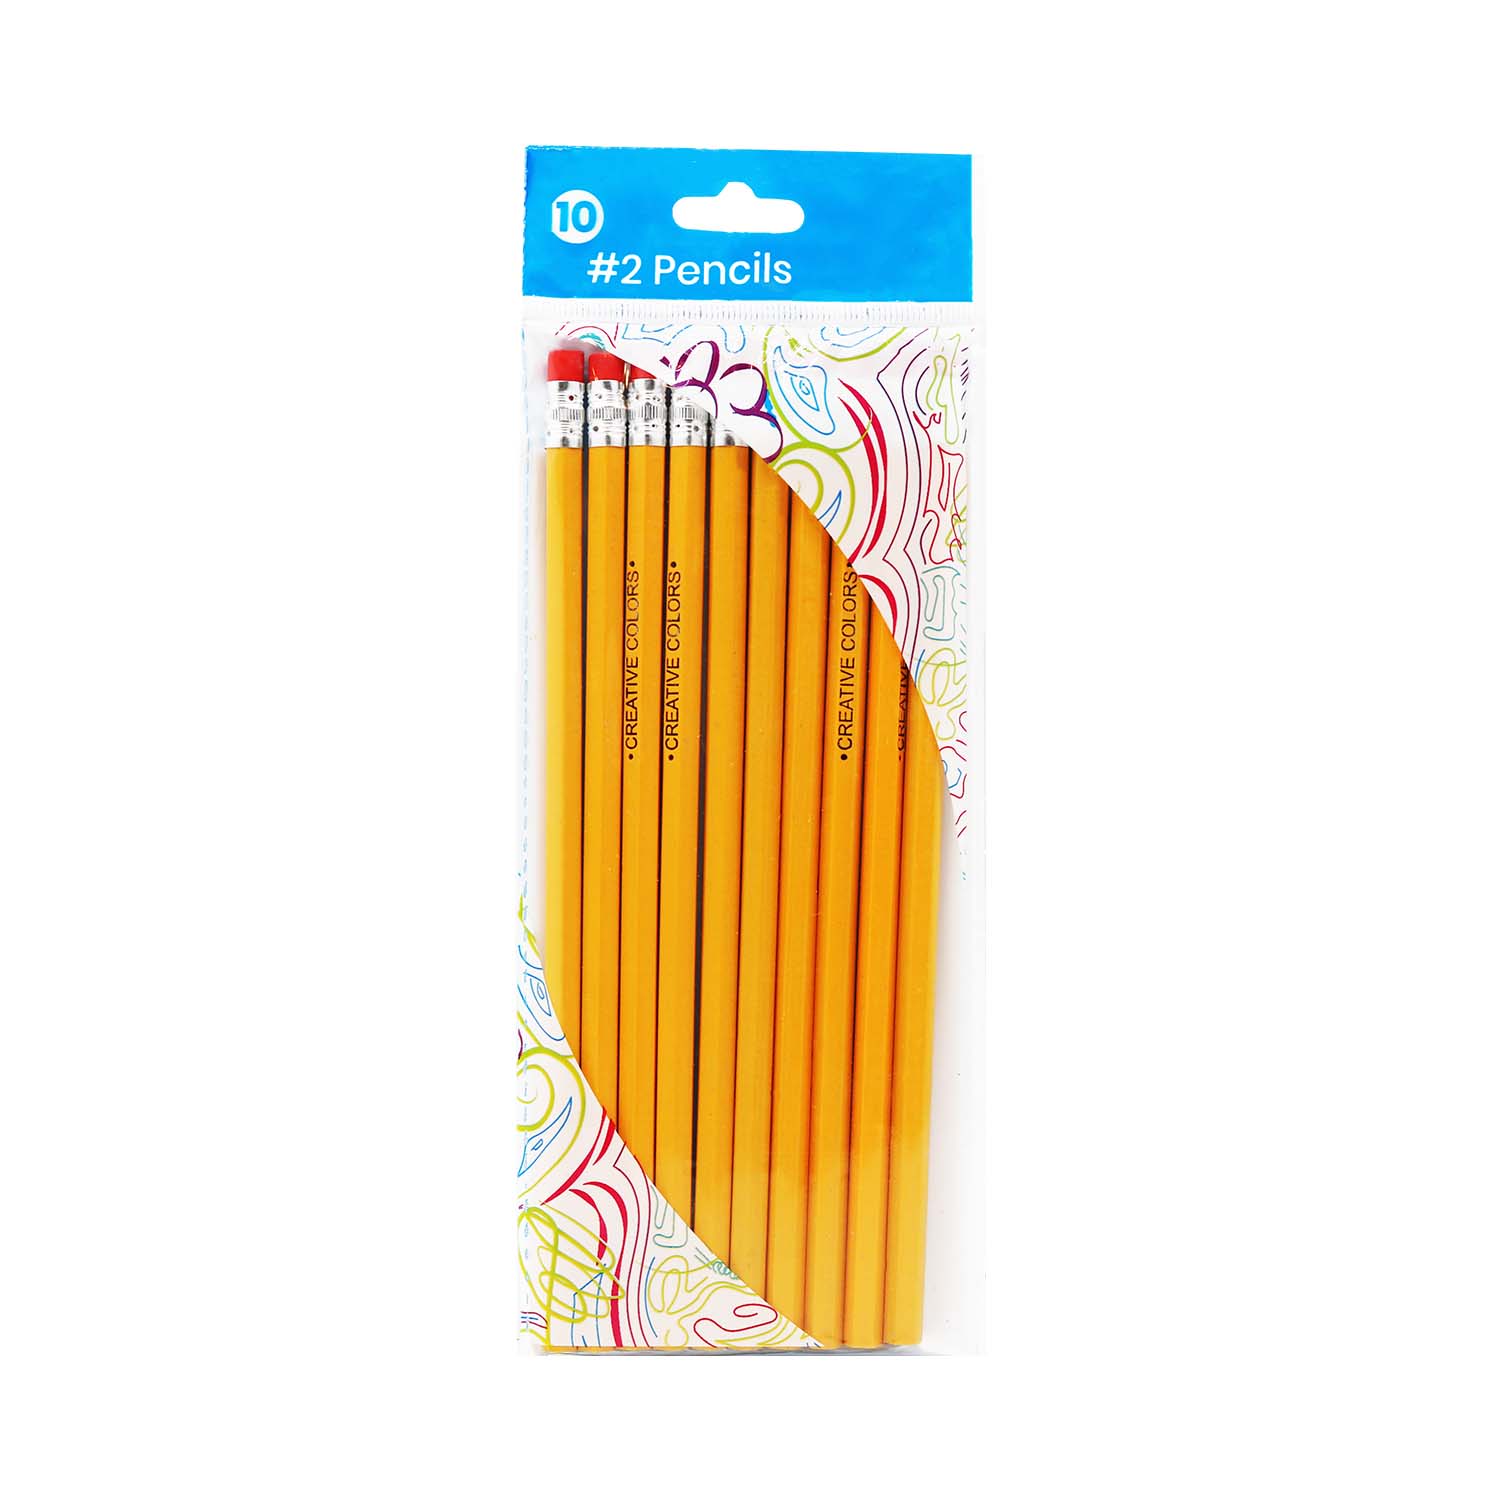 10 Pack of Unsharpened No.2 Pencils - Bulk School Supplies Wholesale Case of 48 - 10 Packs of Pencils